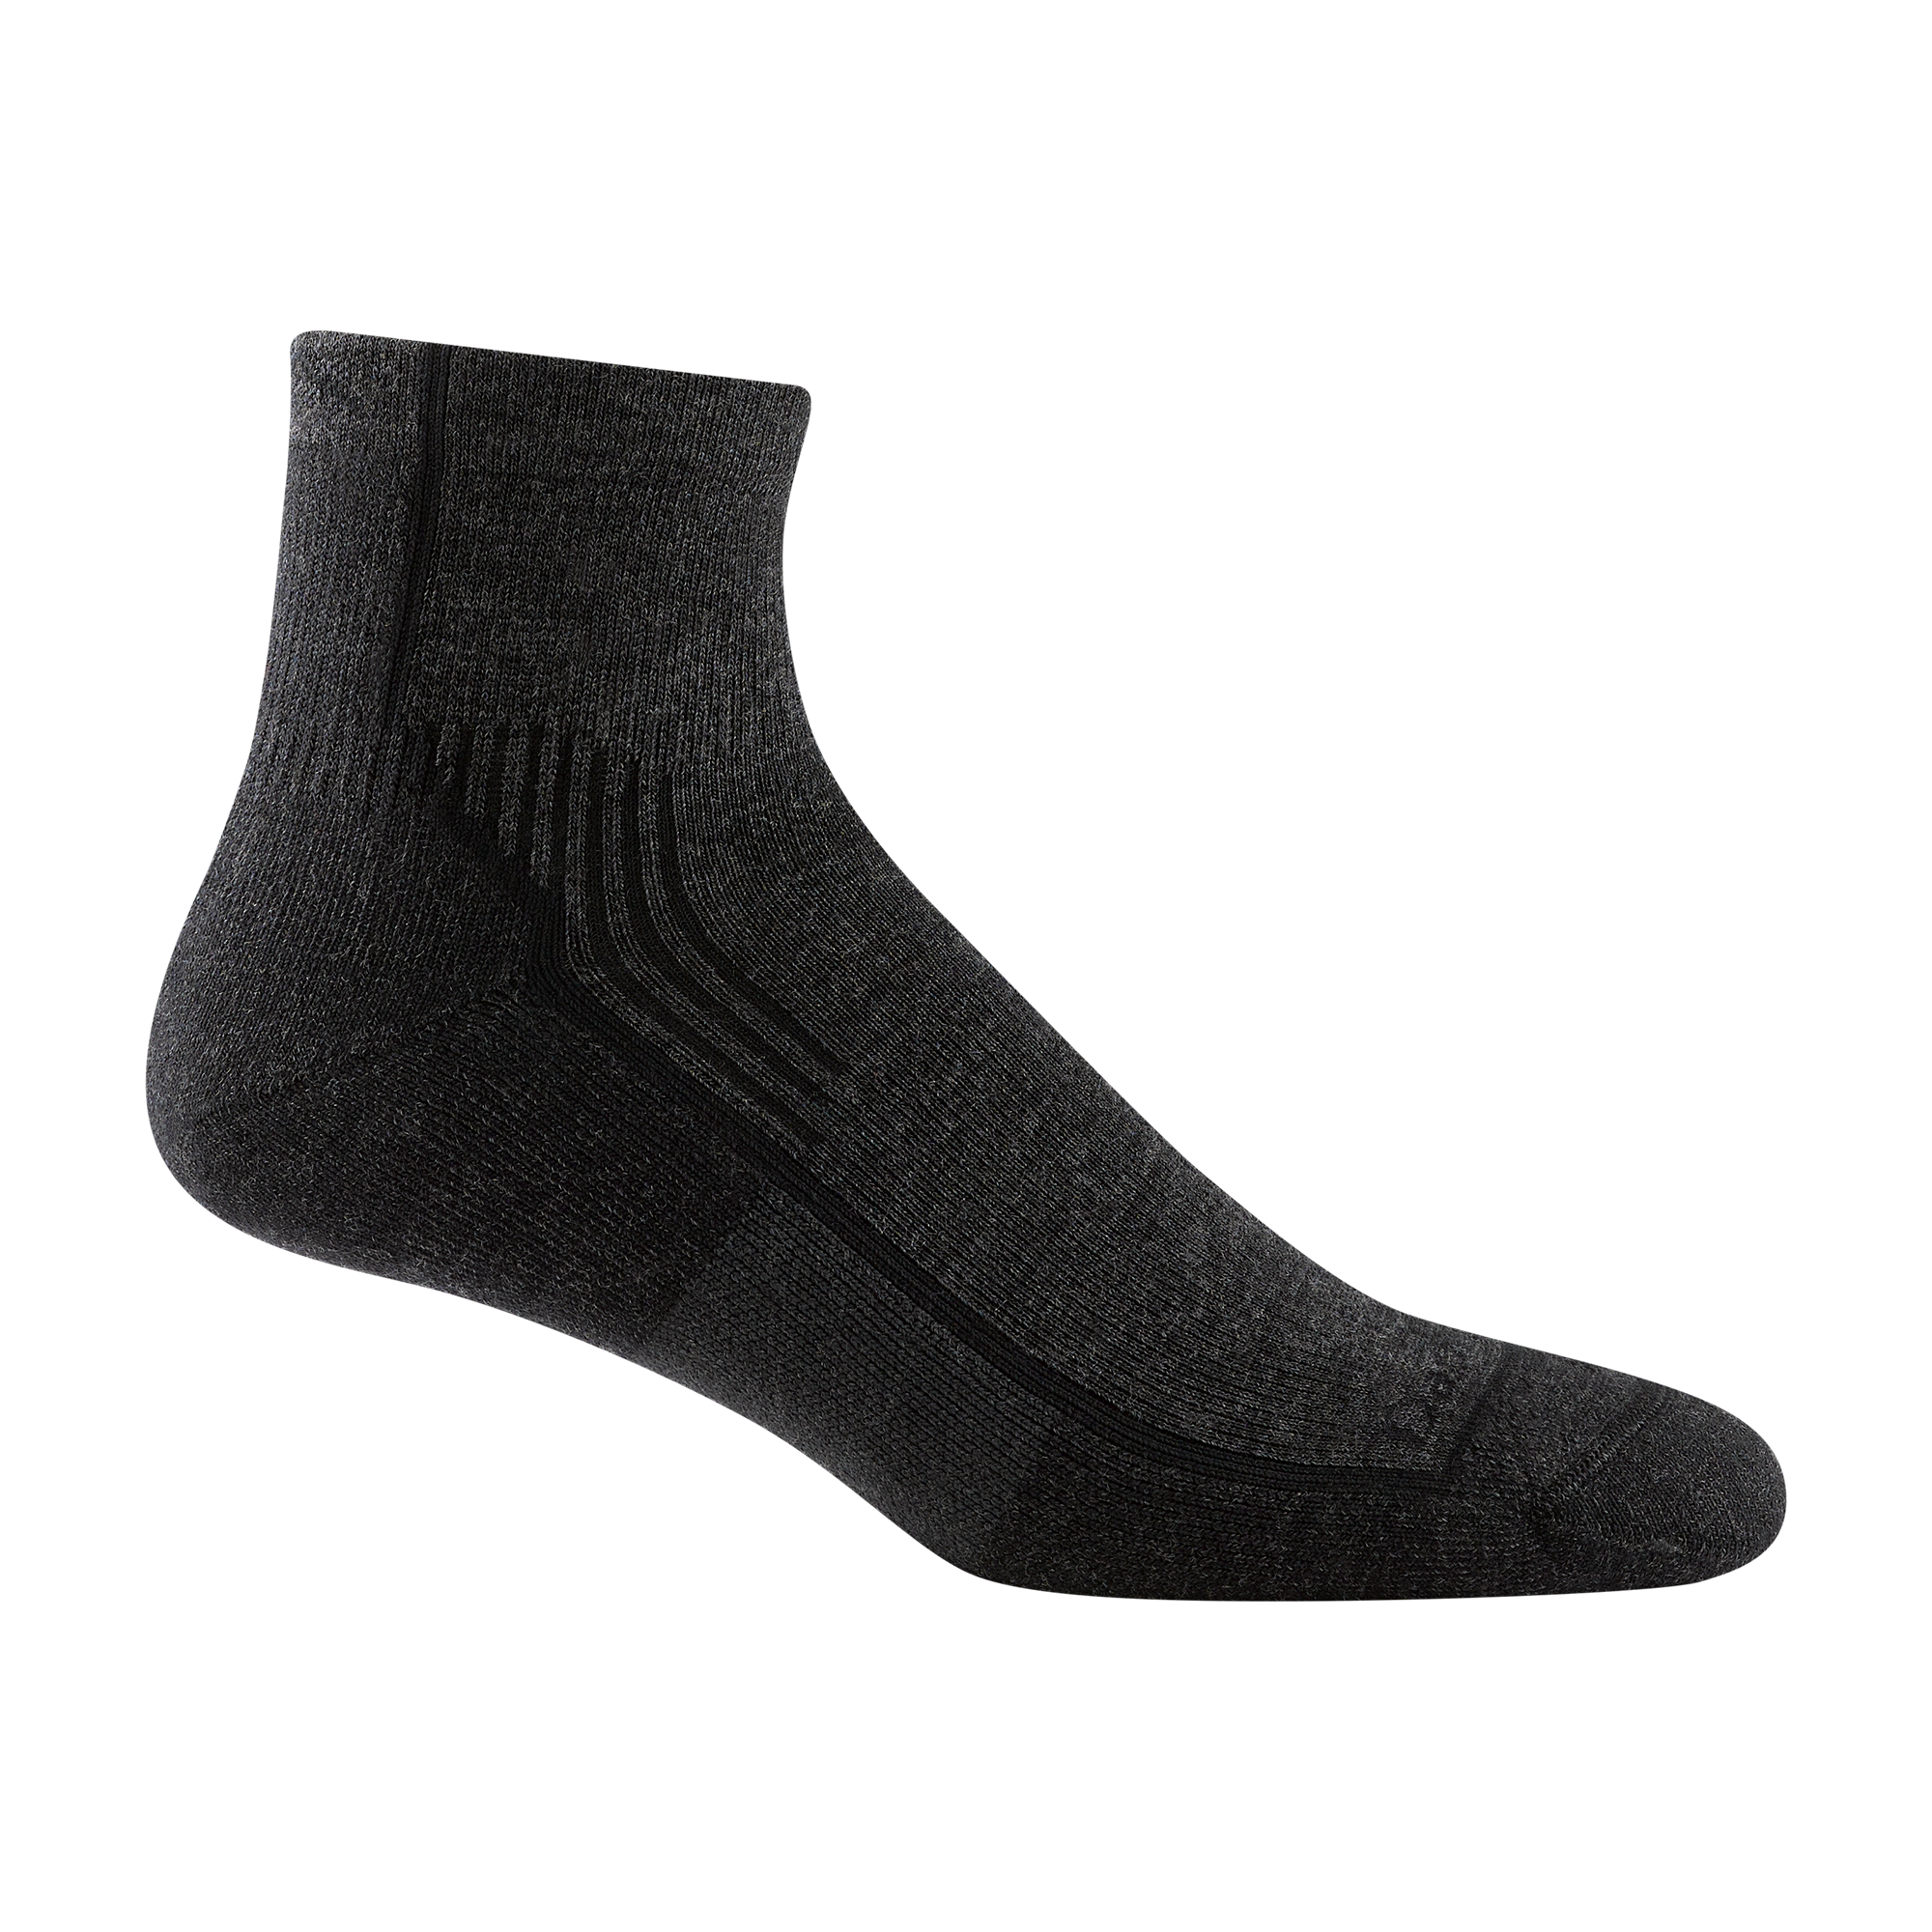 1959 men's quarter hiking sock in color dark gray with black forefoot outline